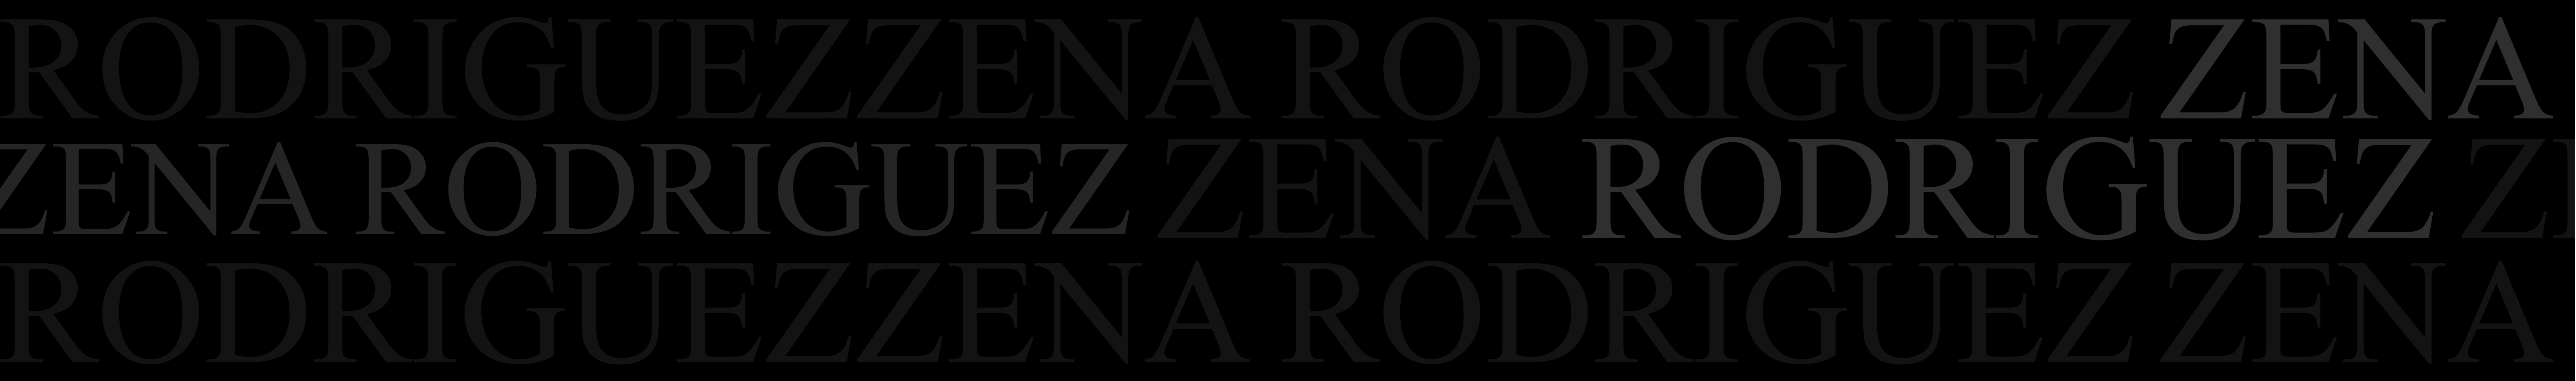 Zena Rodriguez's profile banner